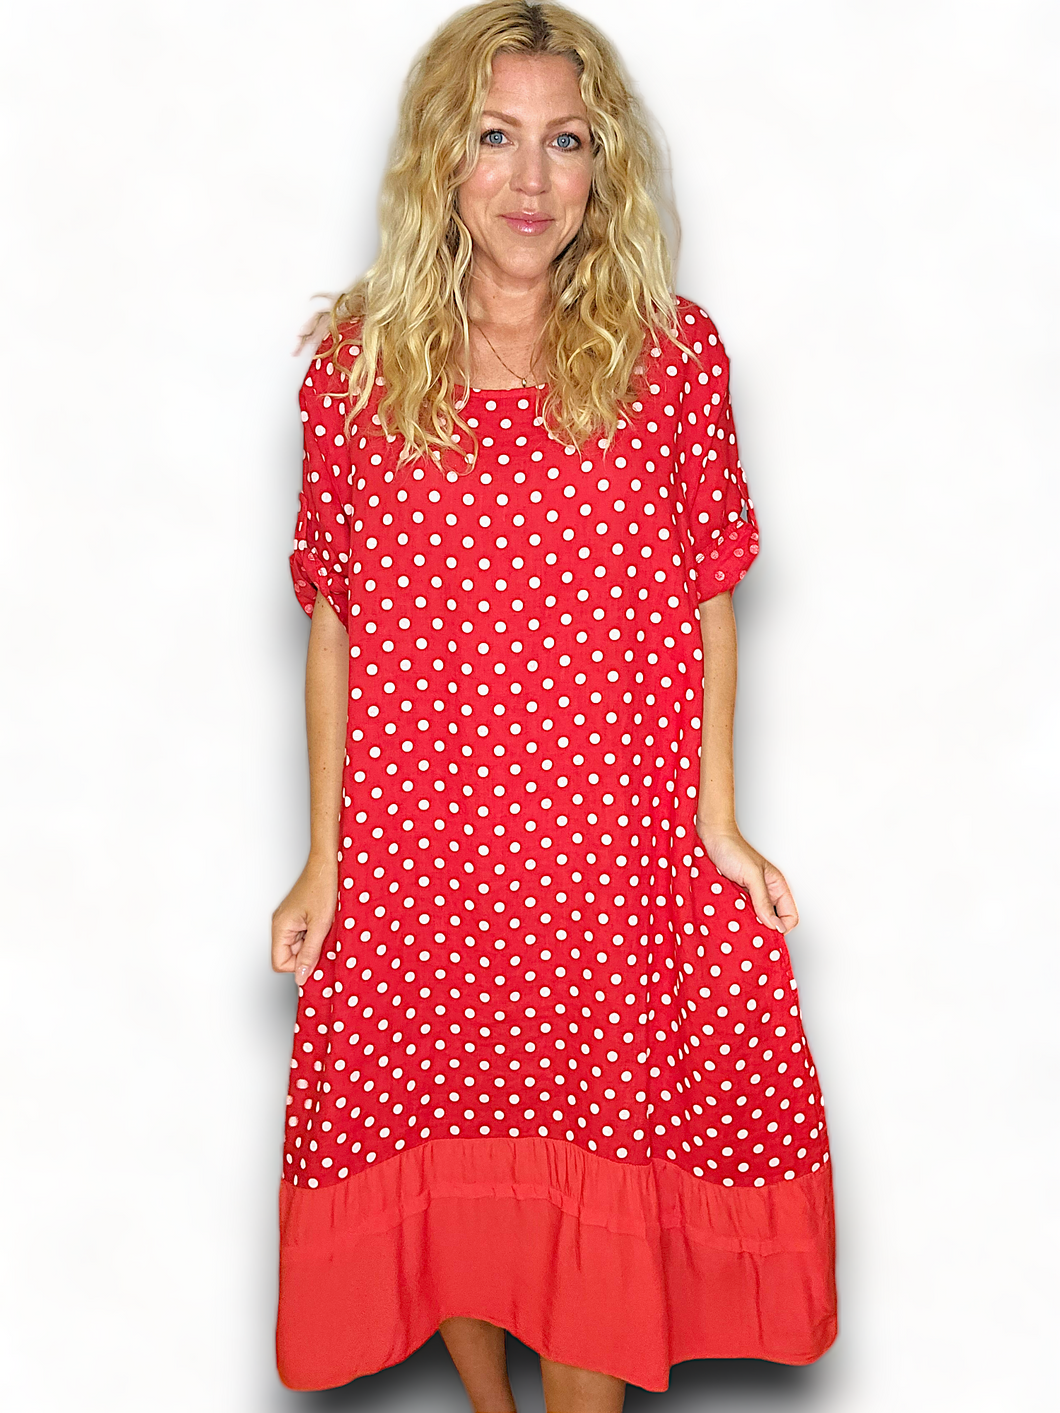 HELGA MAY Polka Dot Plain Hem Red Linen Dress Sz 14-20